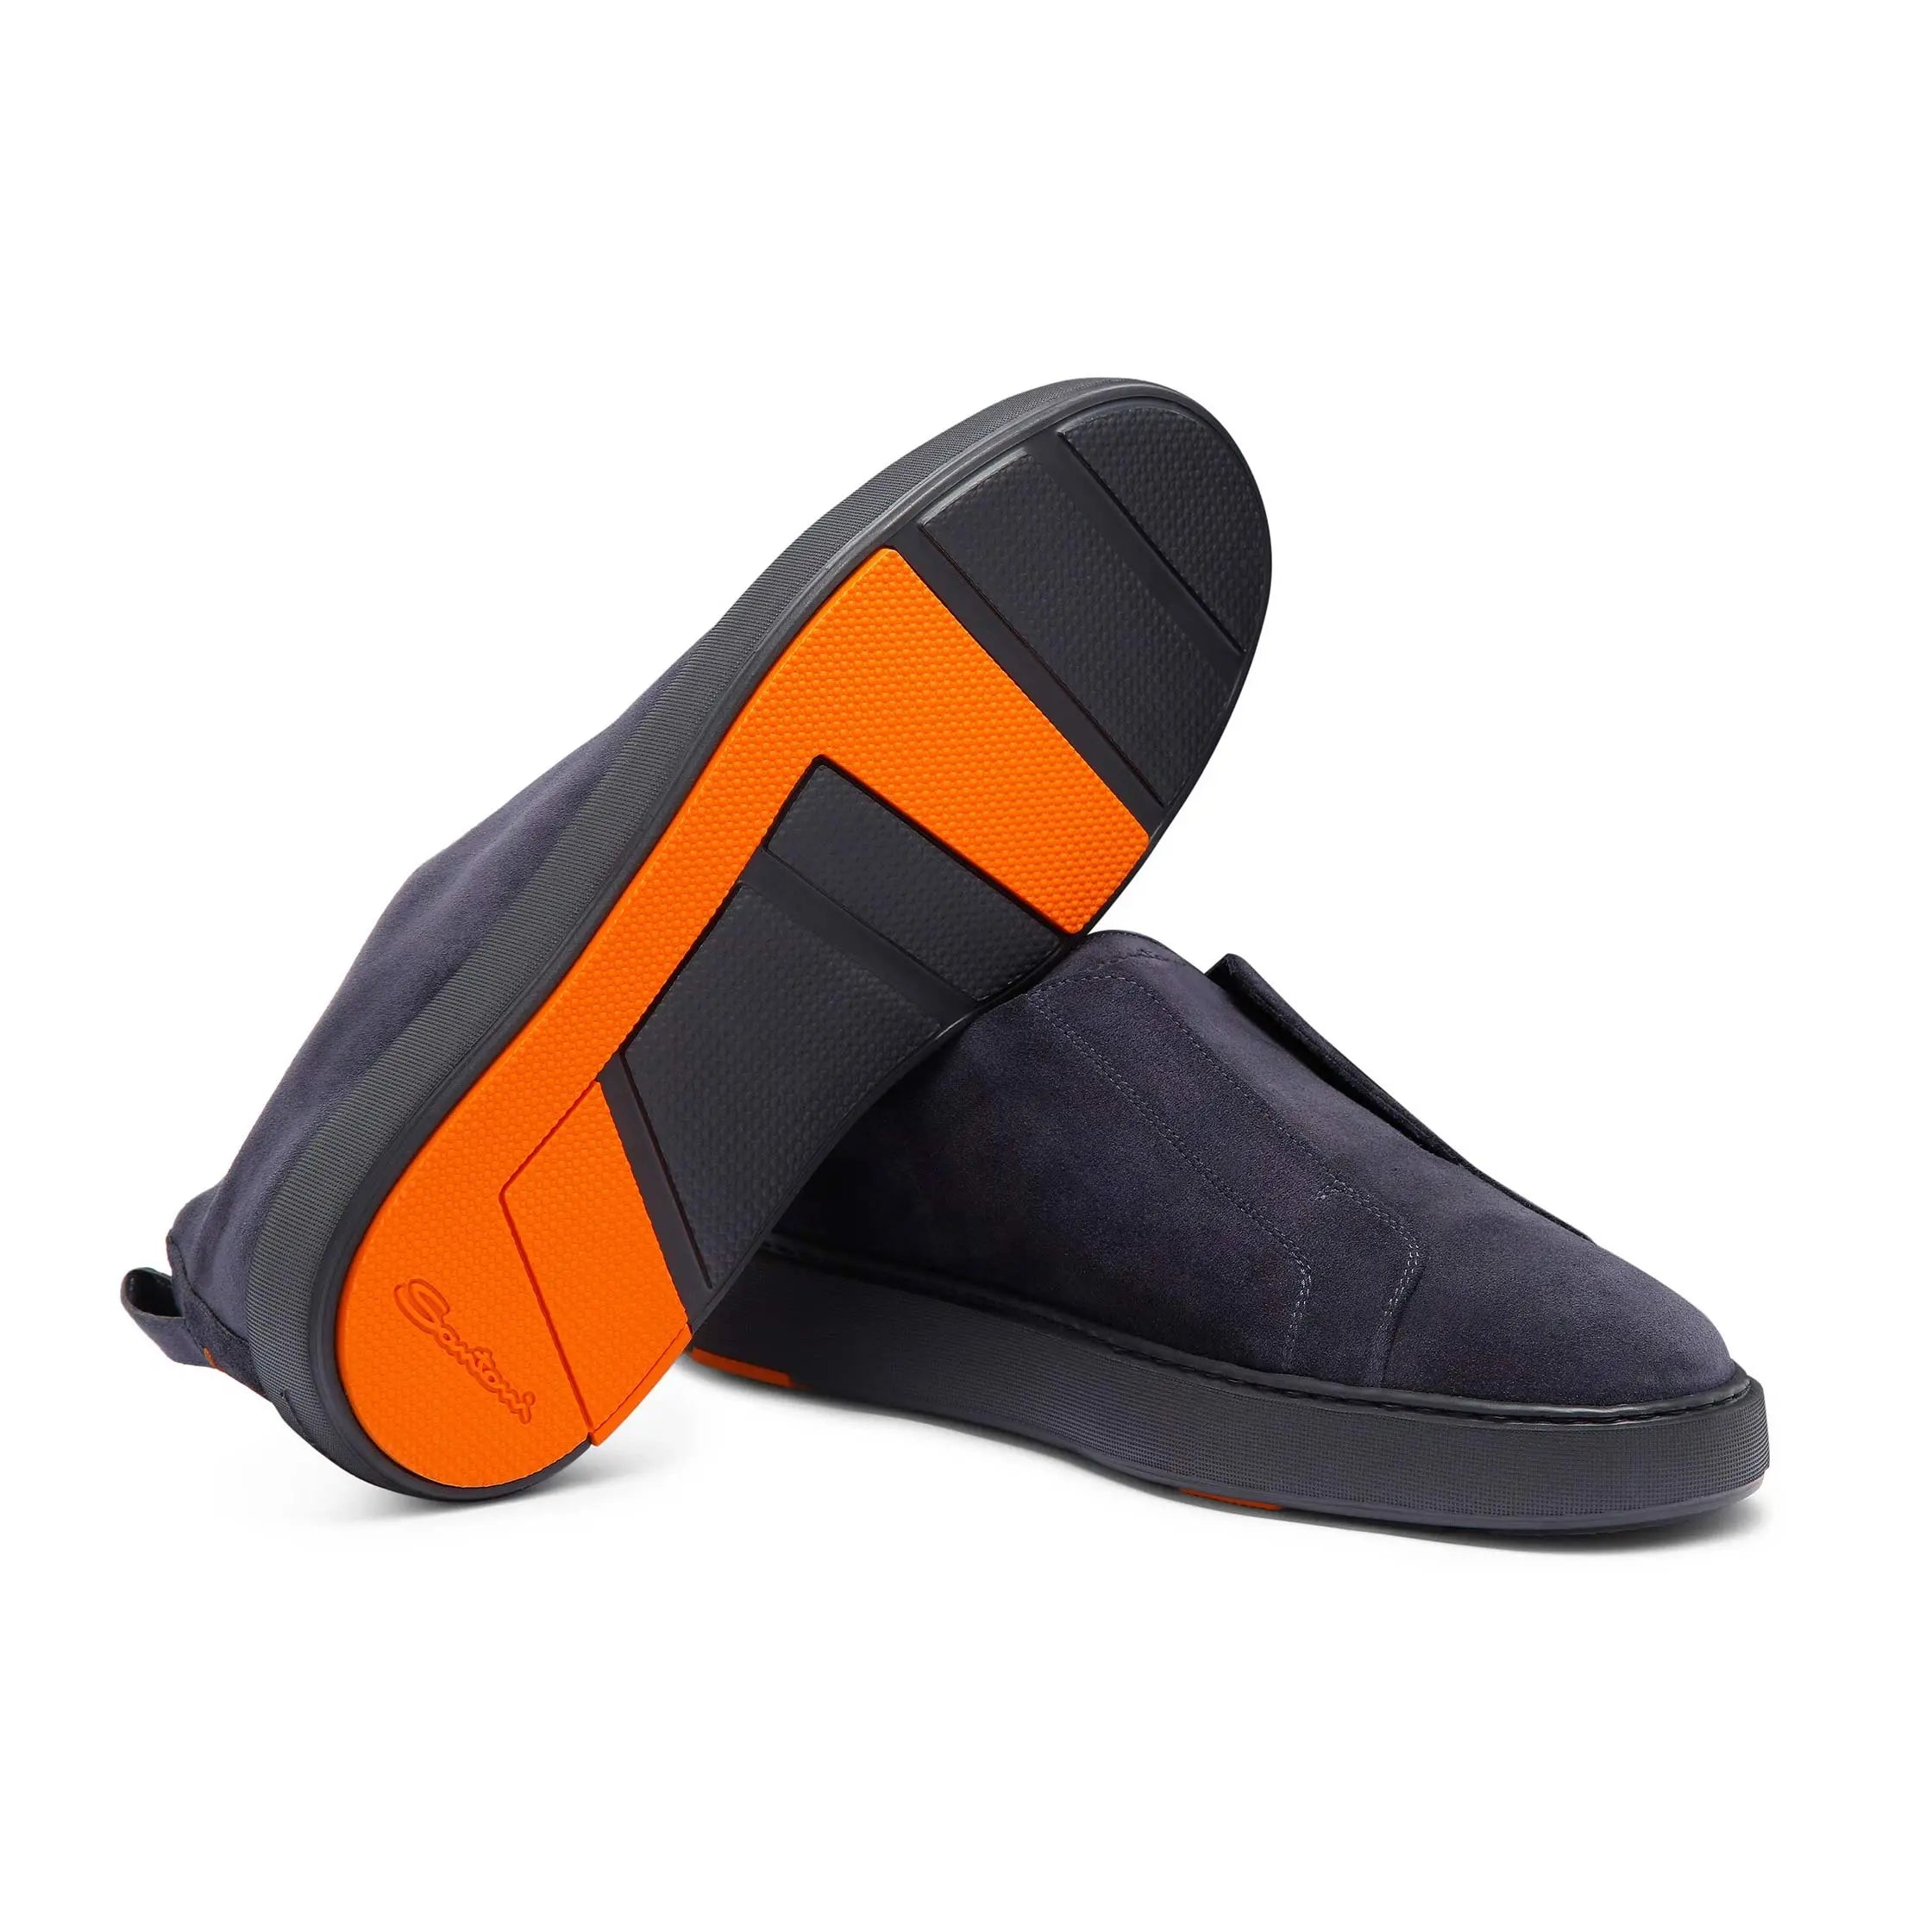 Navy Tumbled Leather Slip-on Sneaker SHOES Santoni   